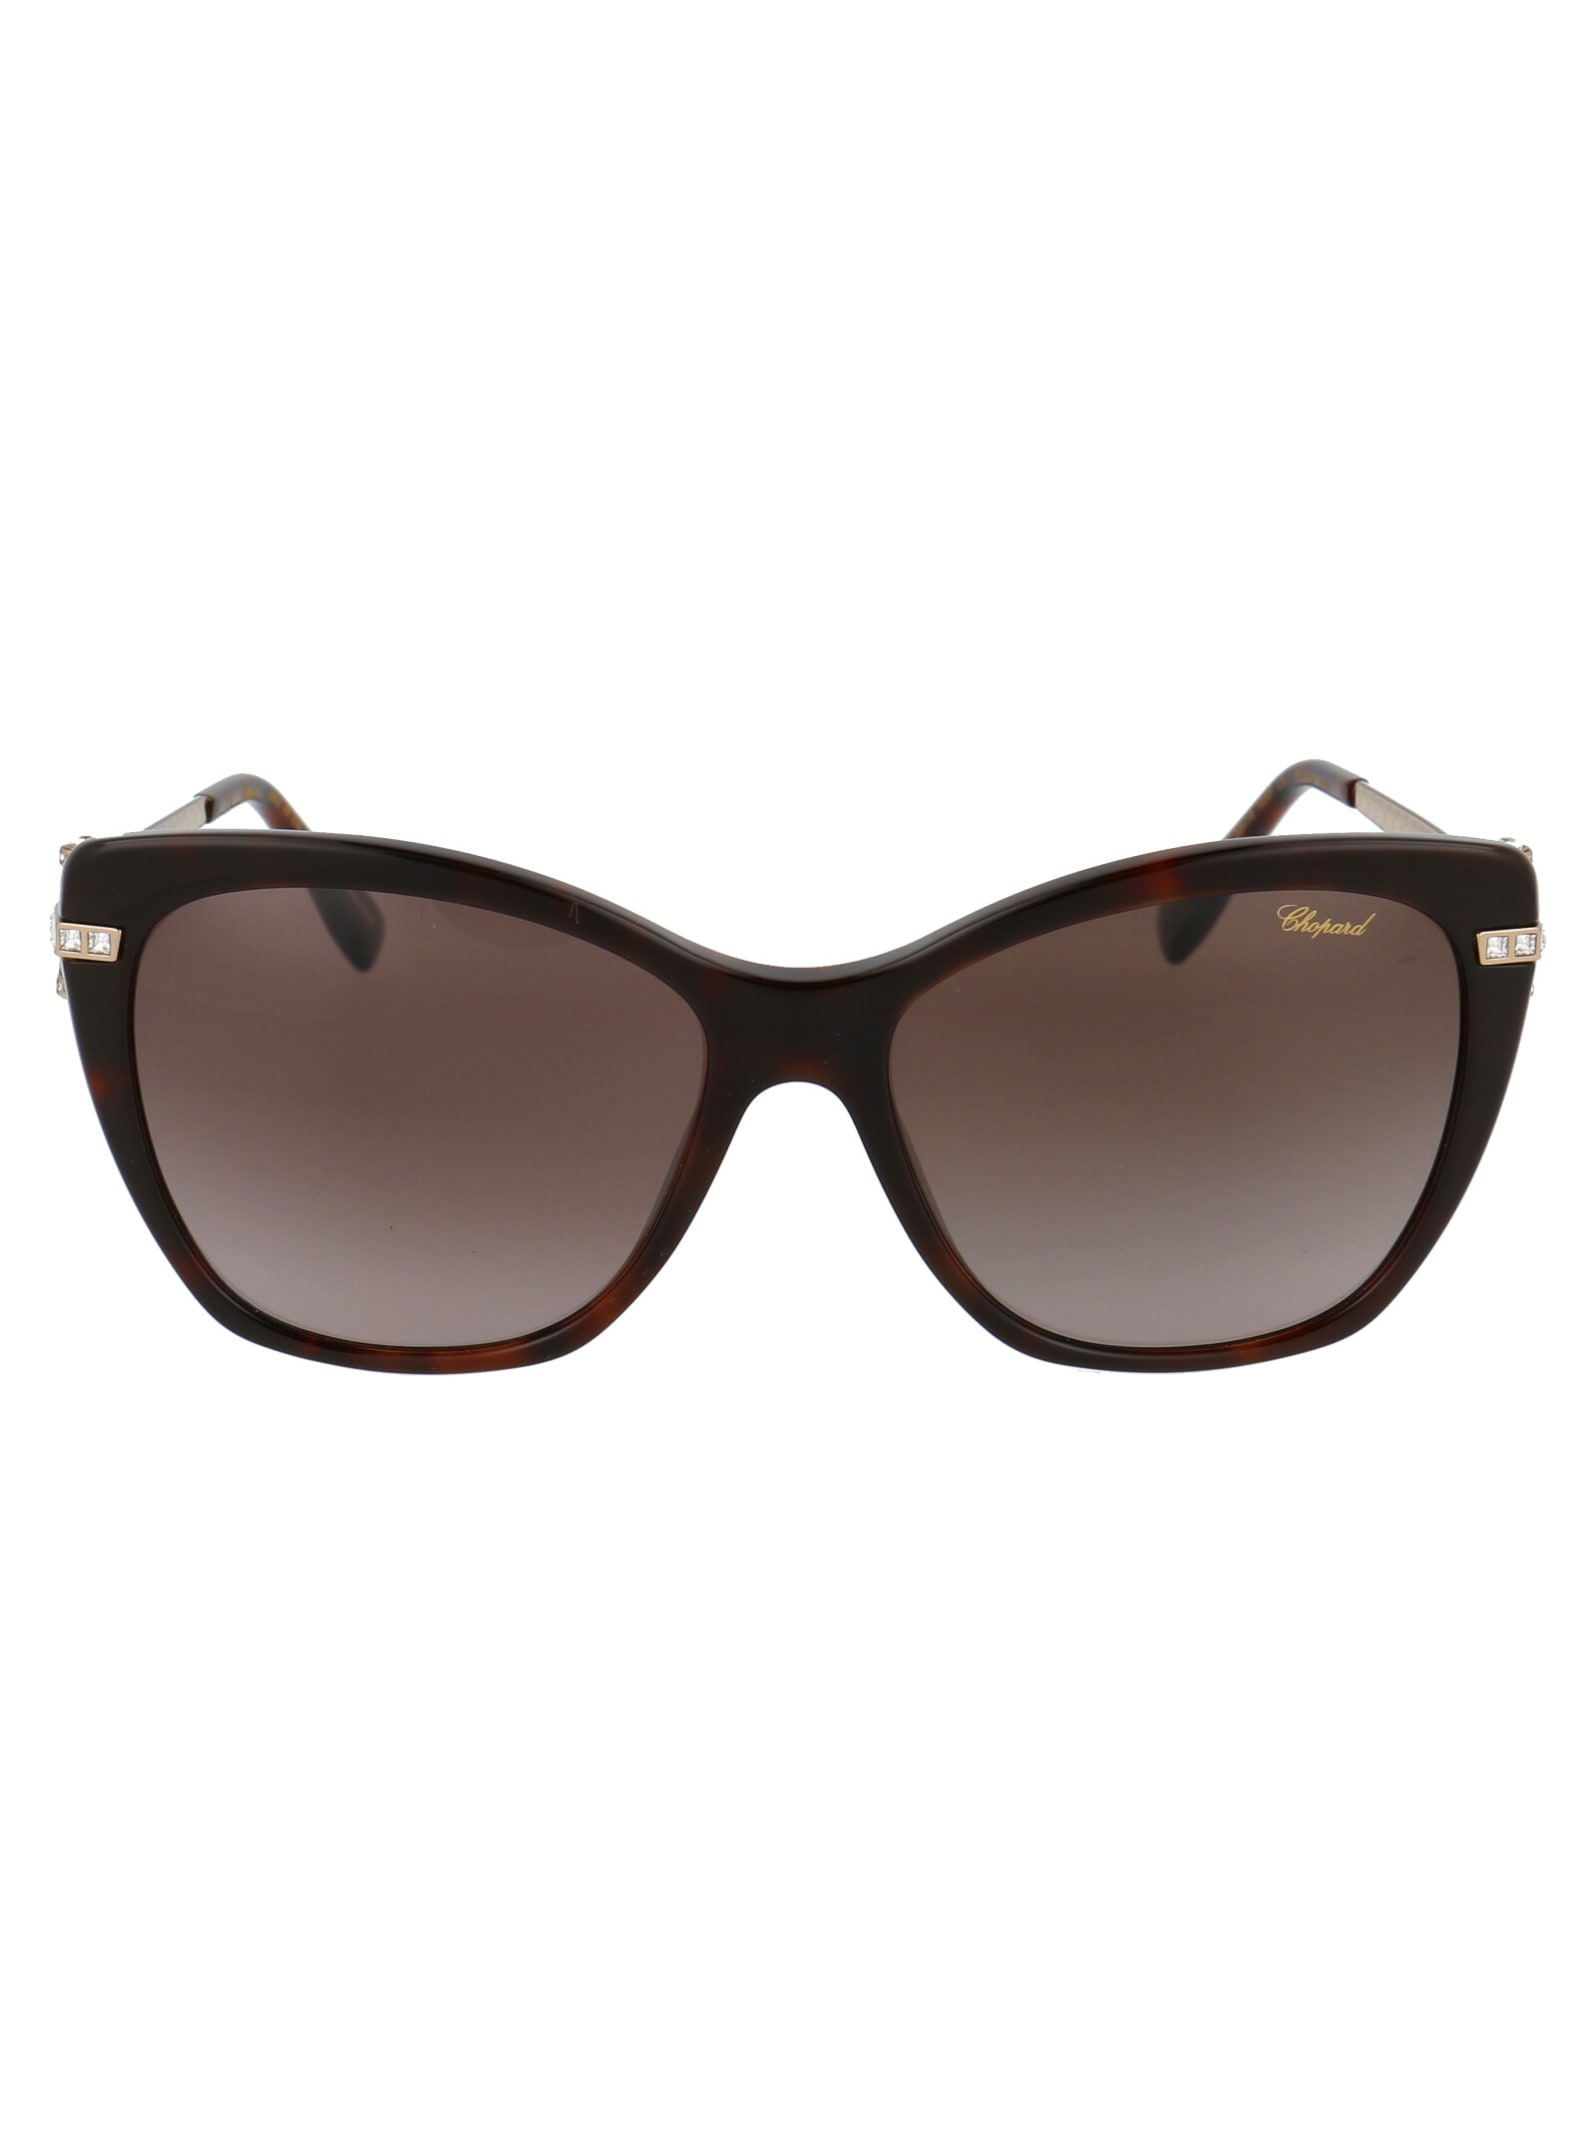 Chopard Sch232s Sunglasses In 9xkp Shiny Dark Havana